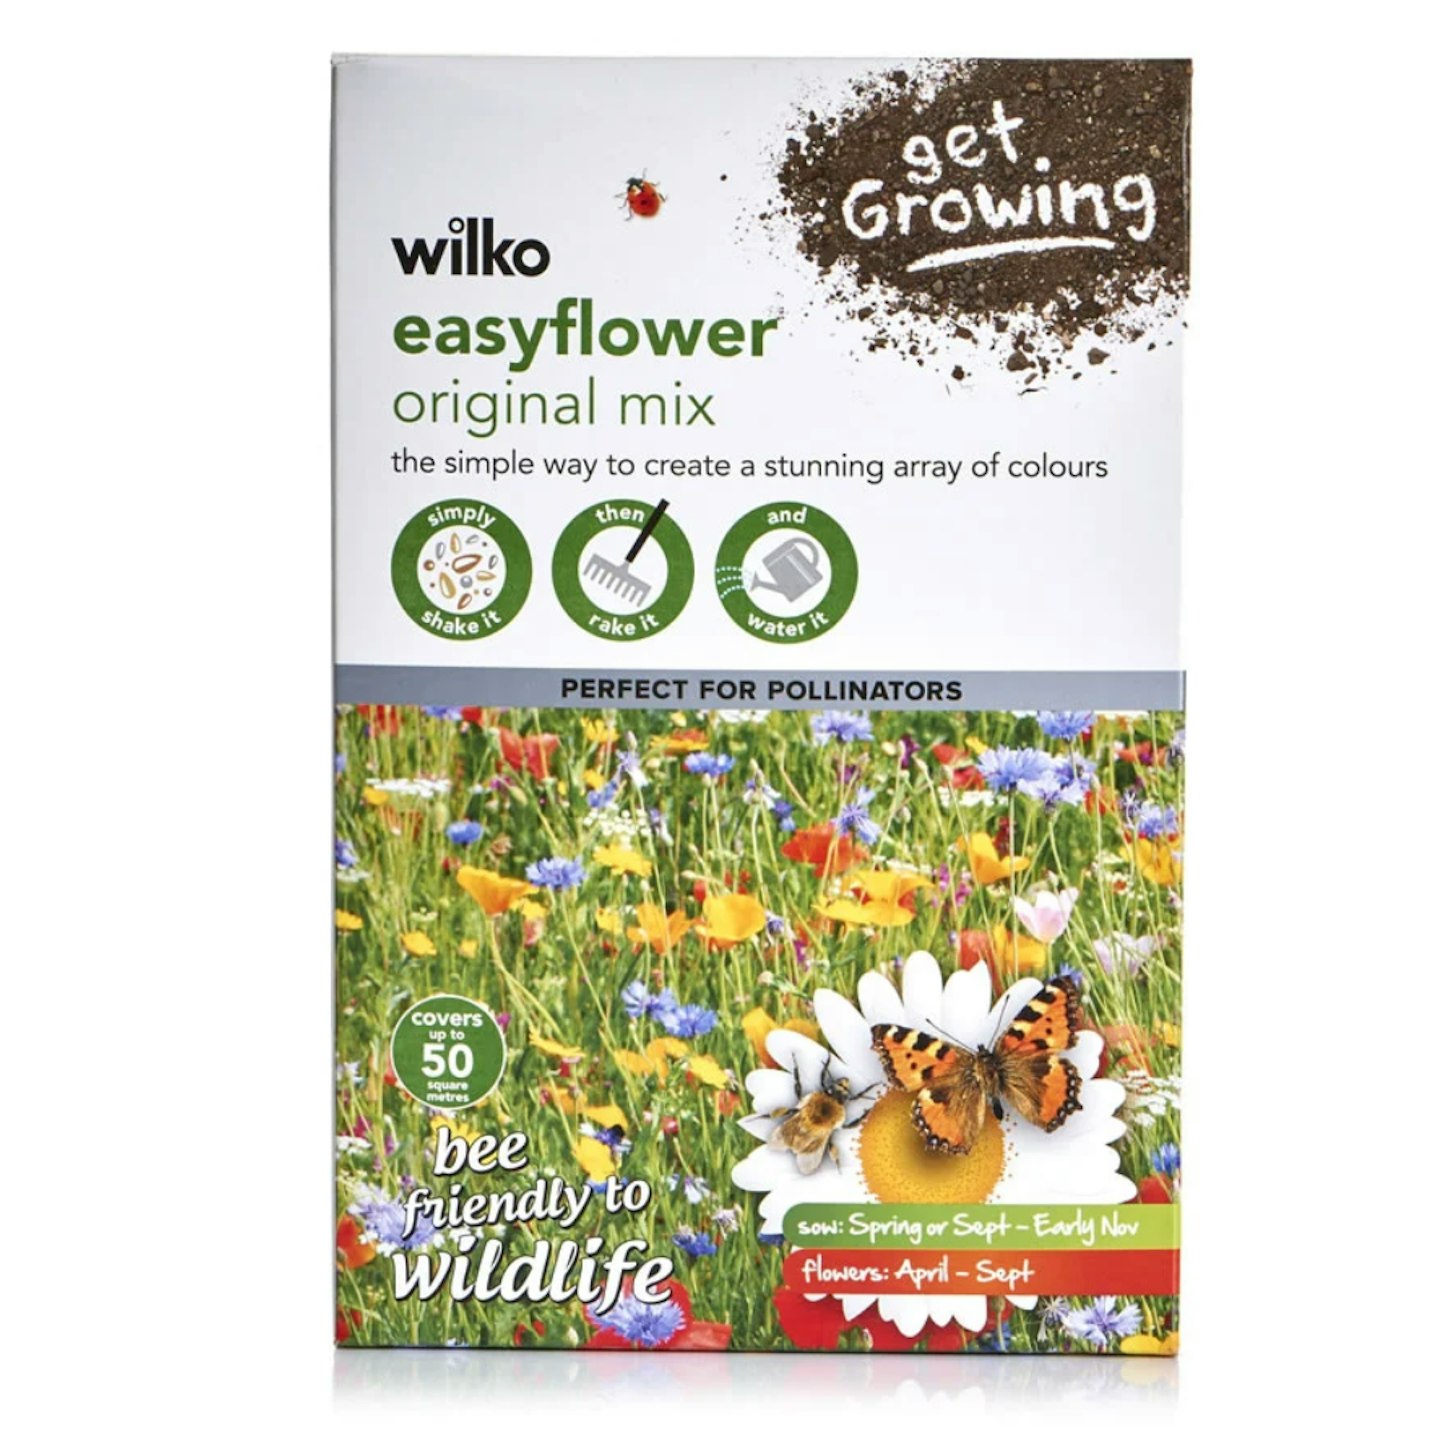 Wilko Easy Flower Original Mix Seeds